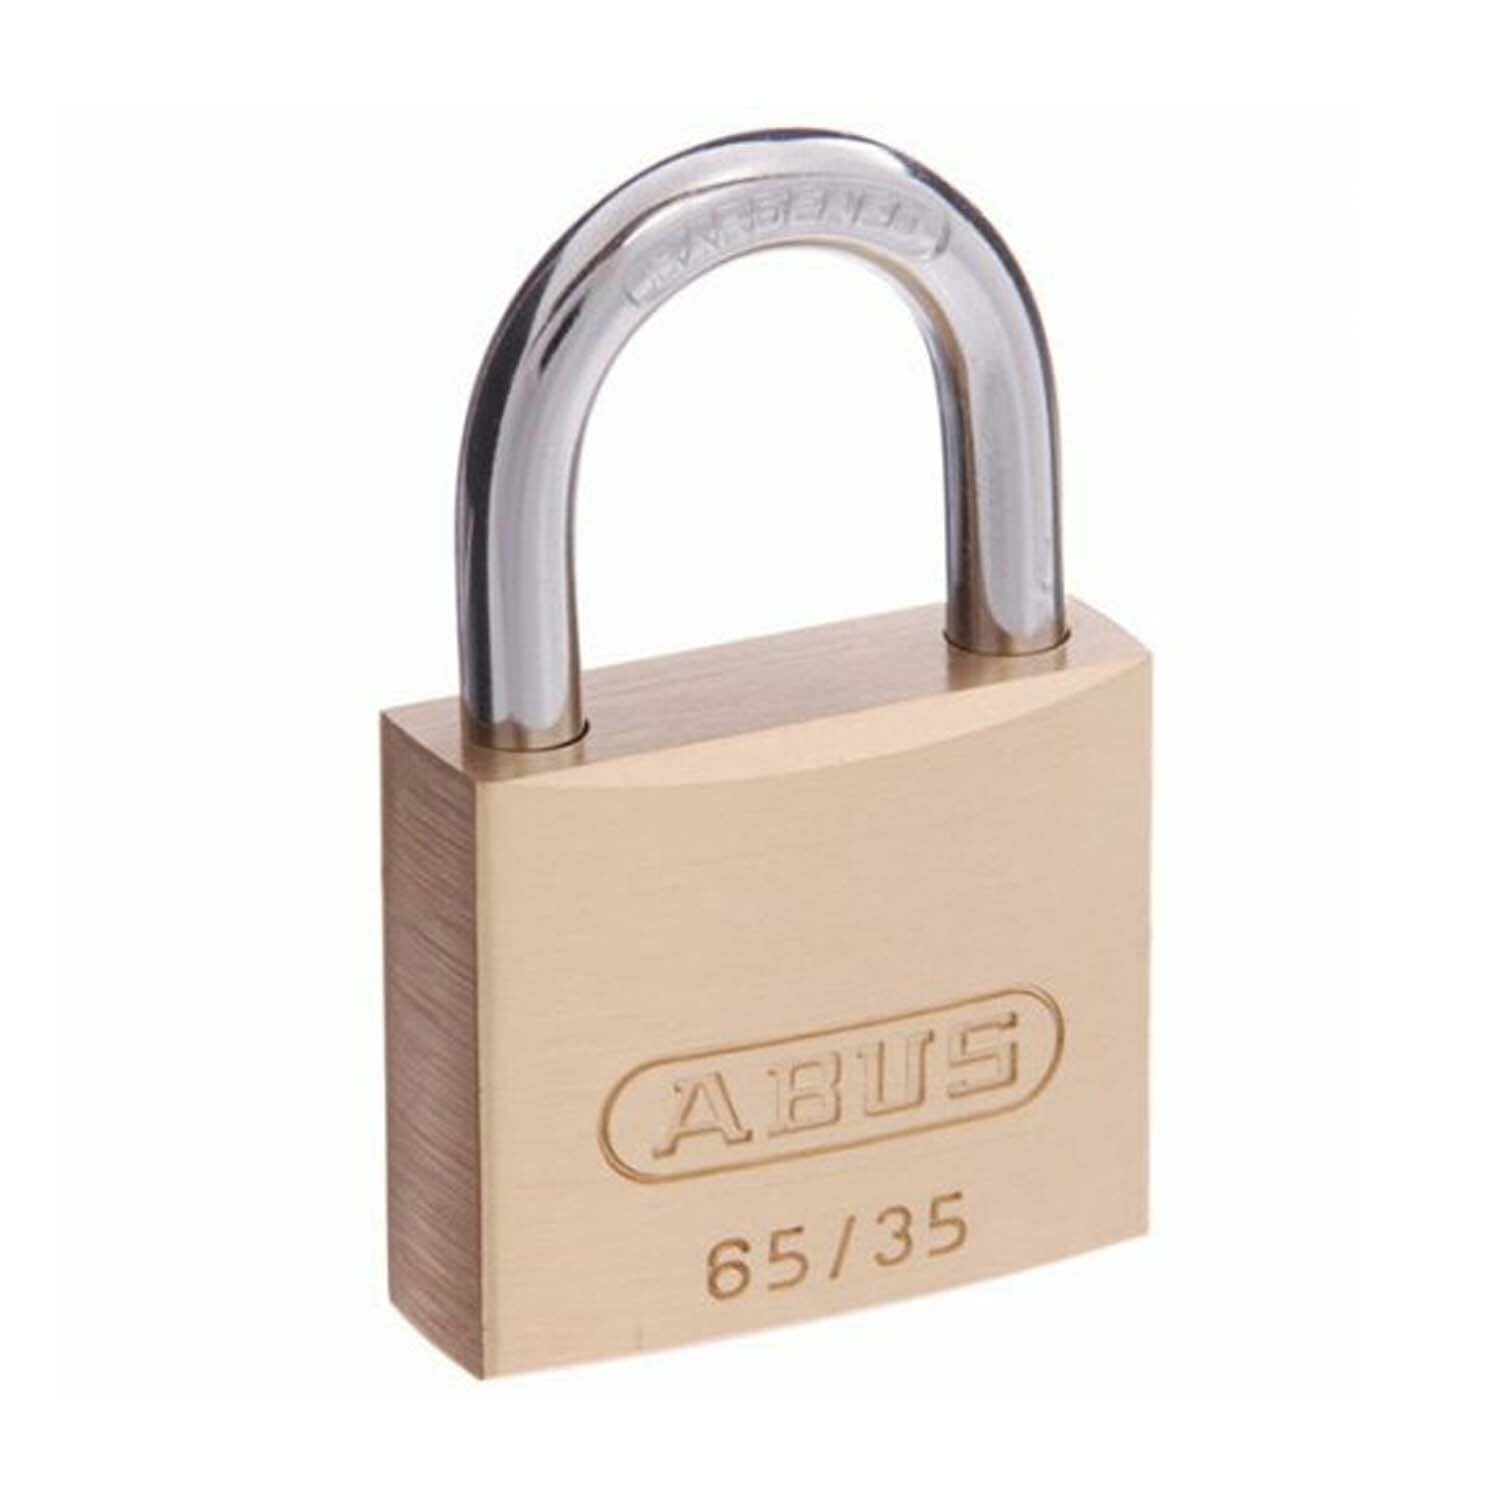 ABUS 65/35 Security Padlock Brass Keyed Alike 6535KA1 